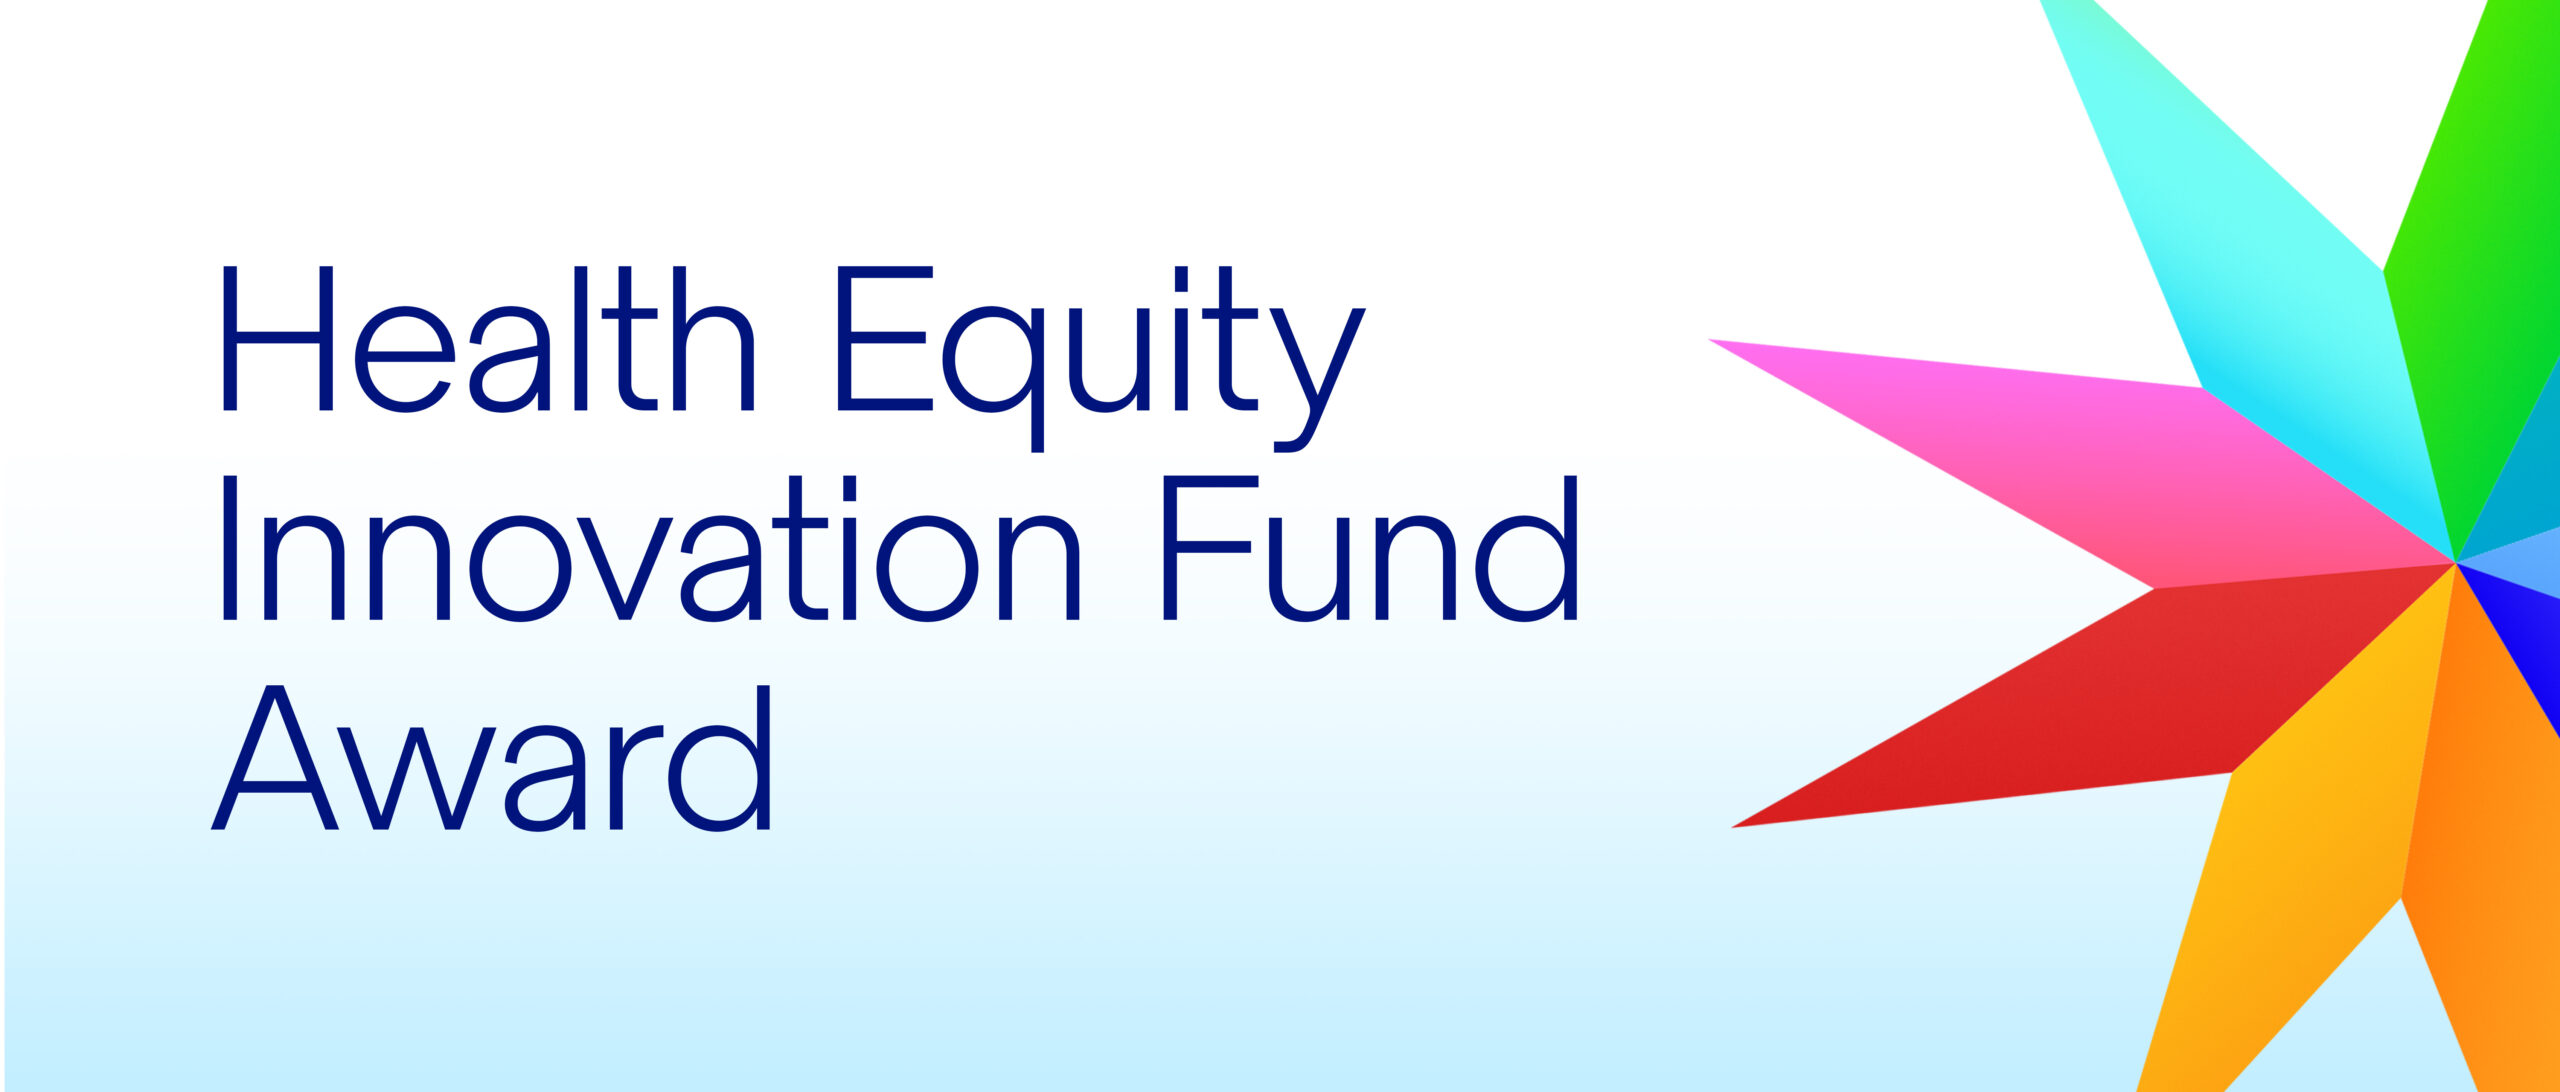 Health Equity Innovation Fund Award